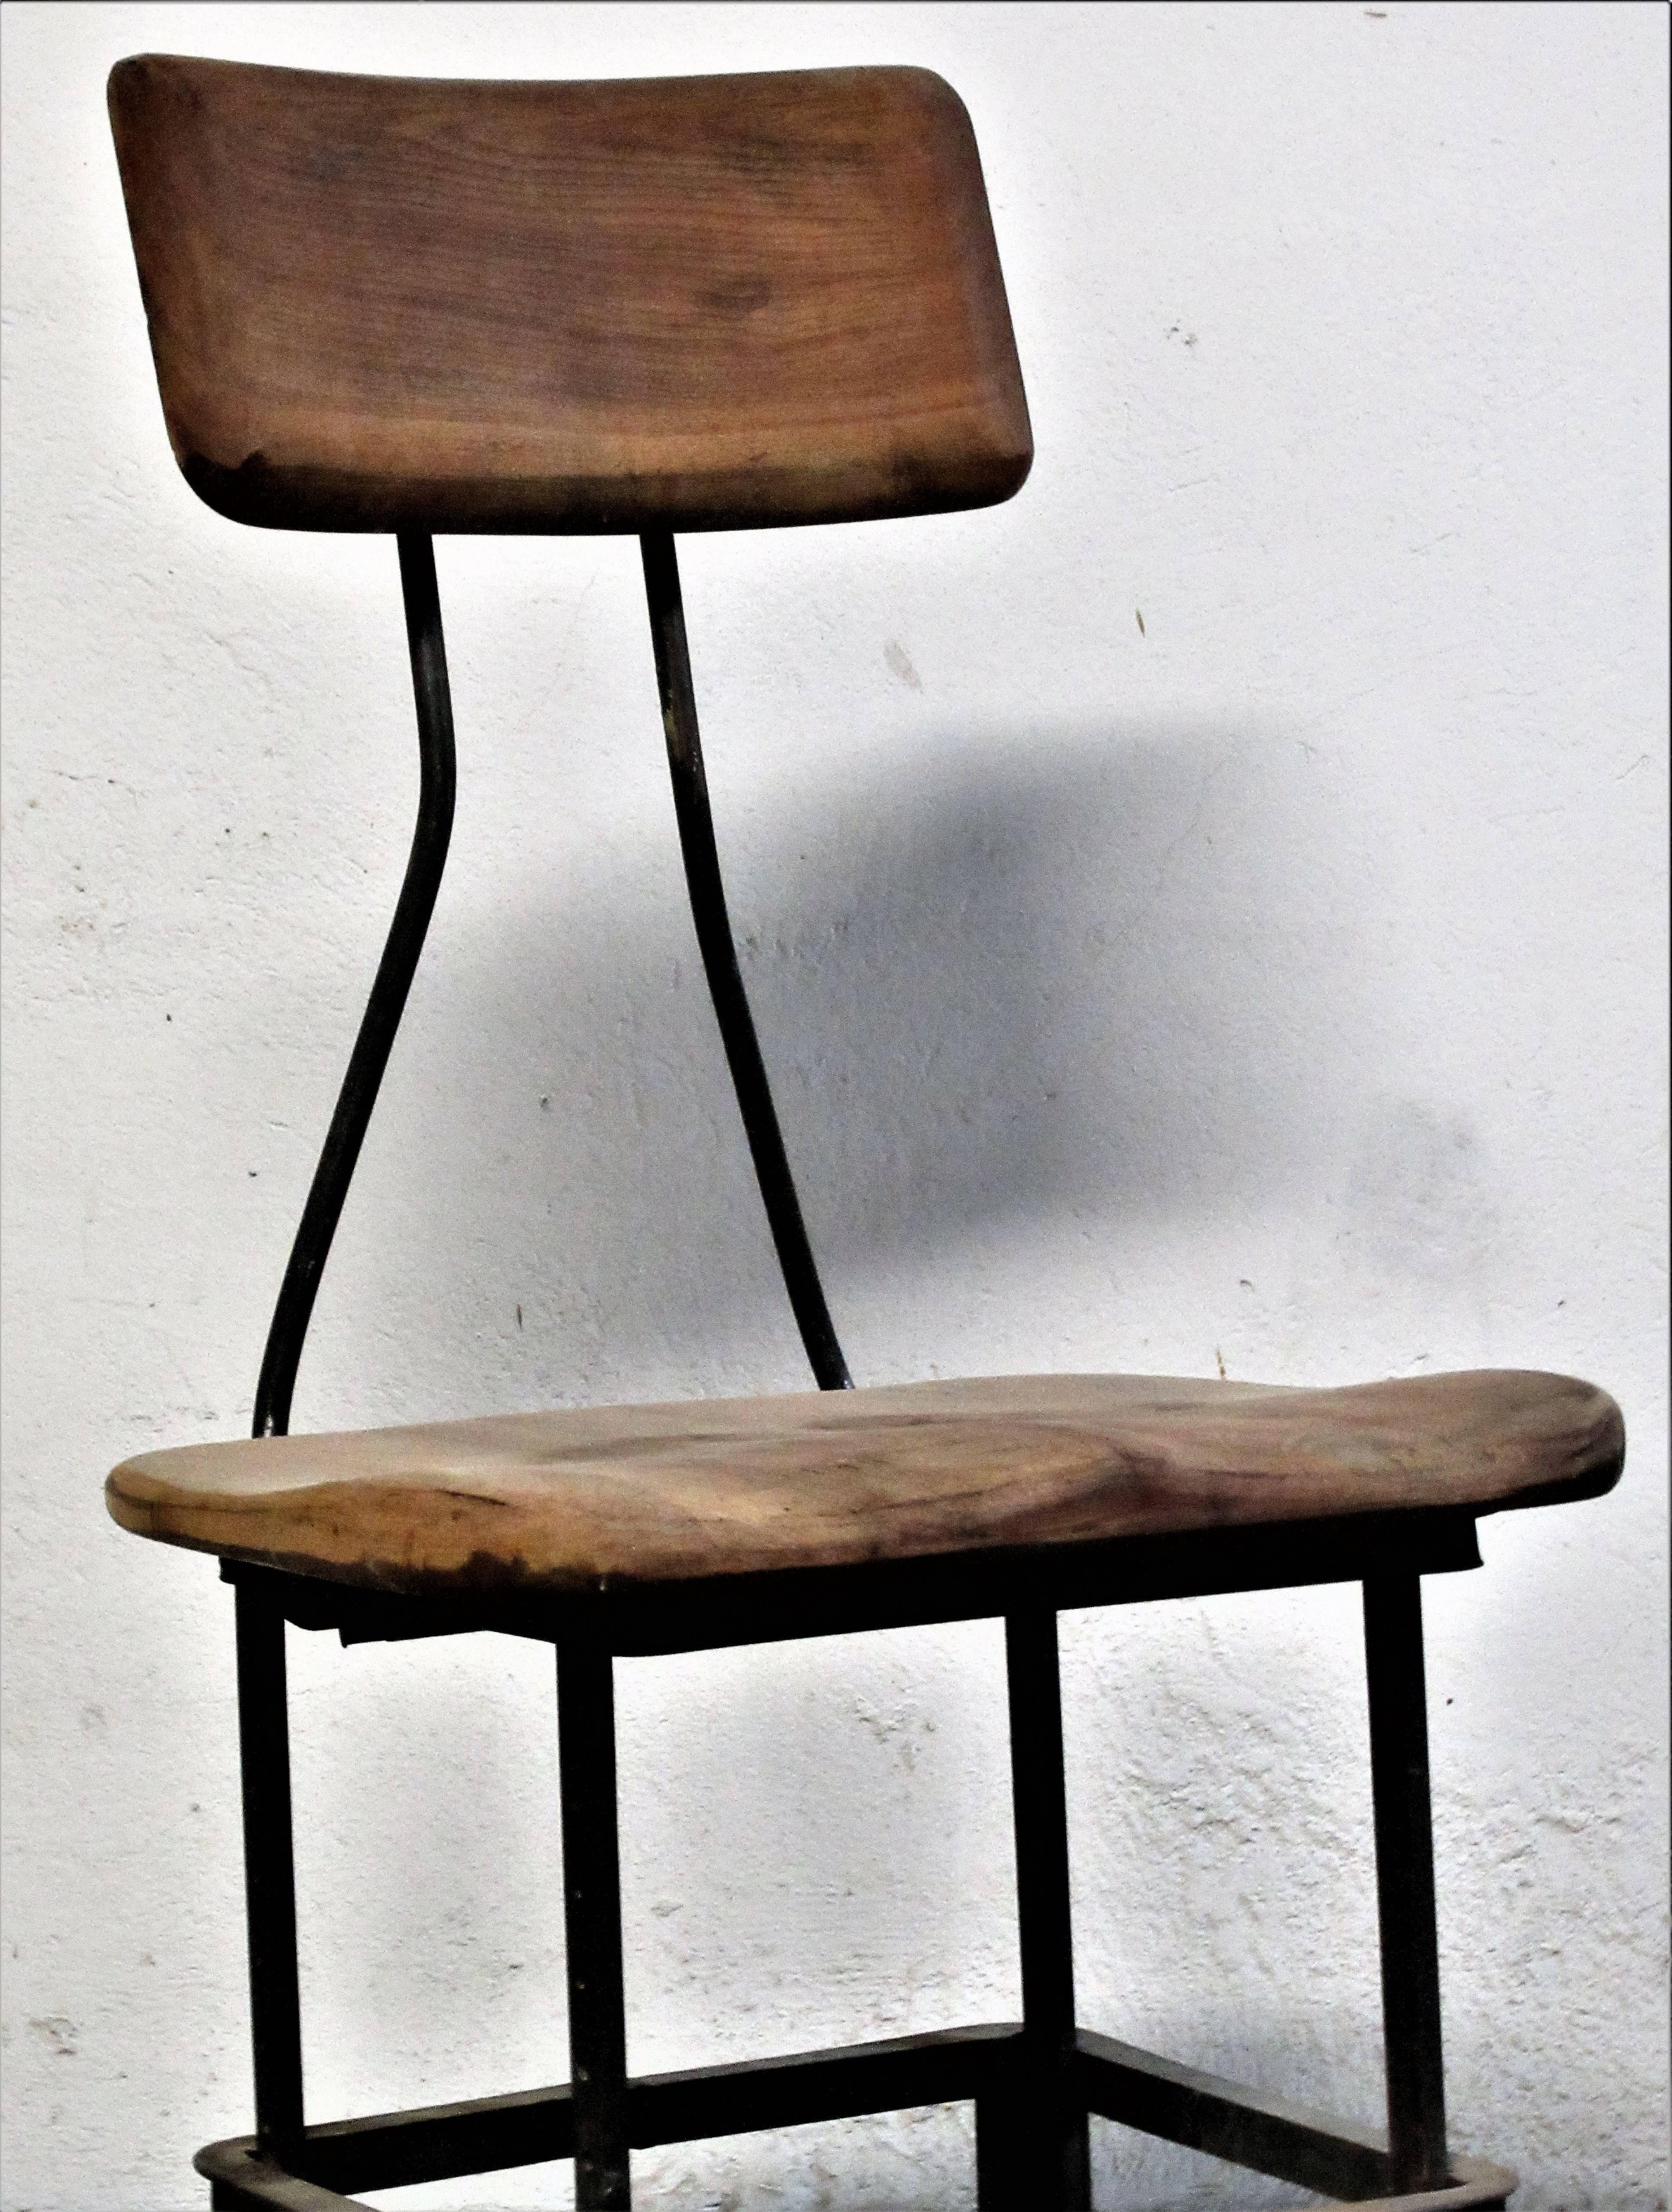 Antique Industrial Task Chair Stool Toledo 4